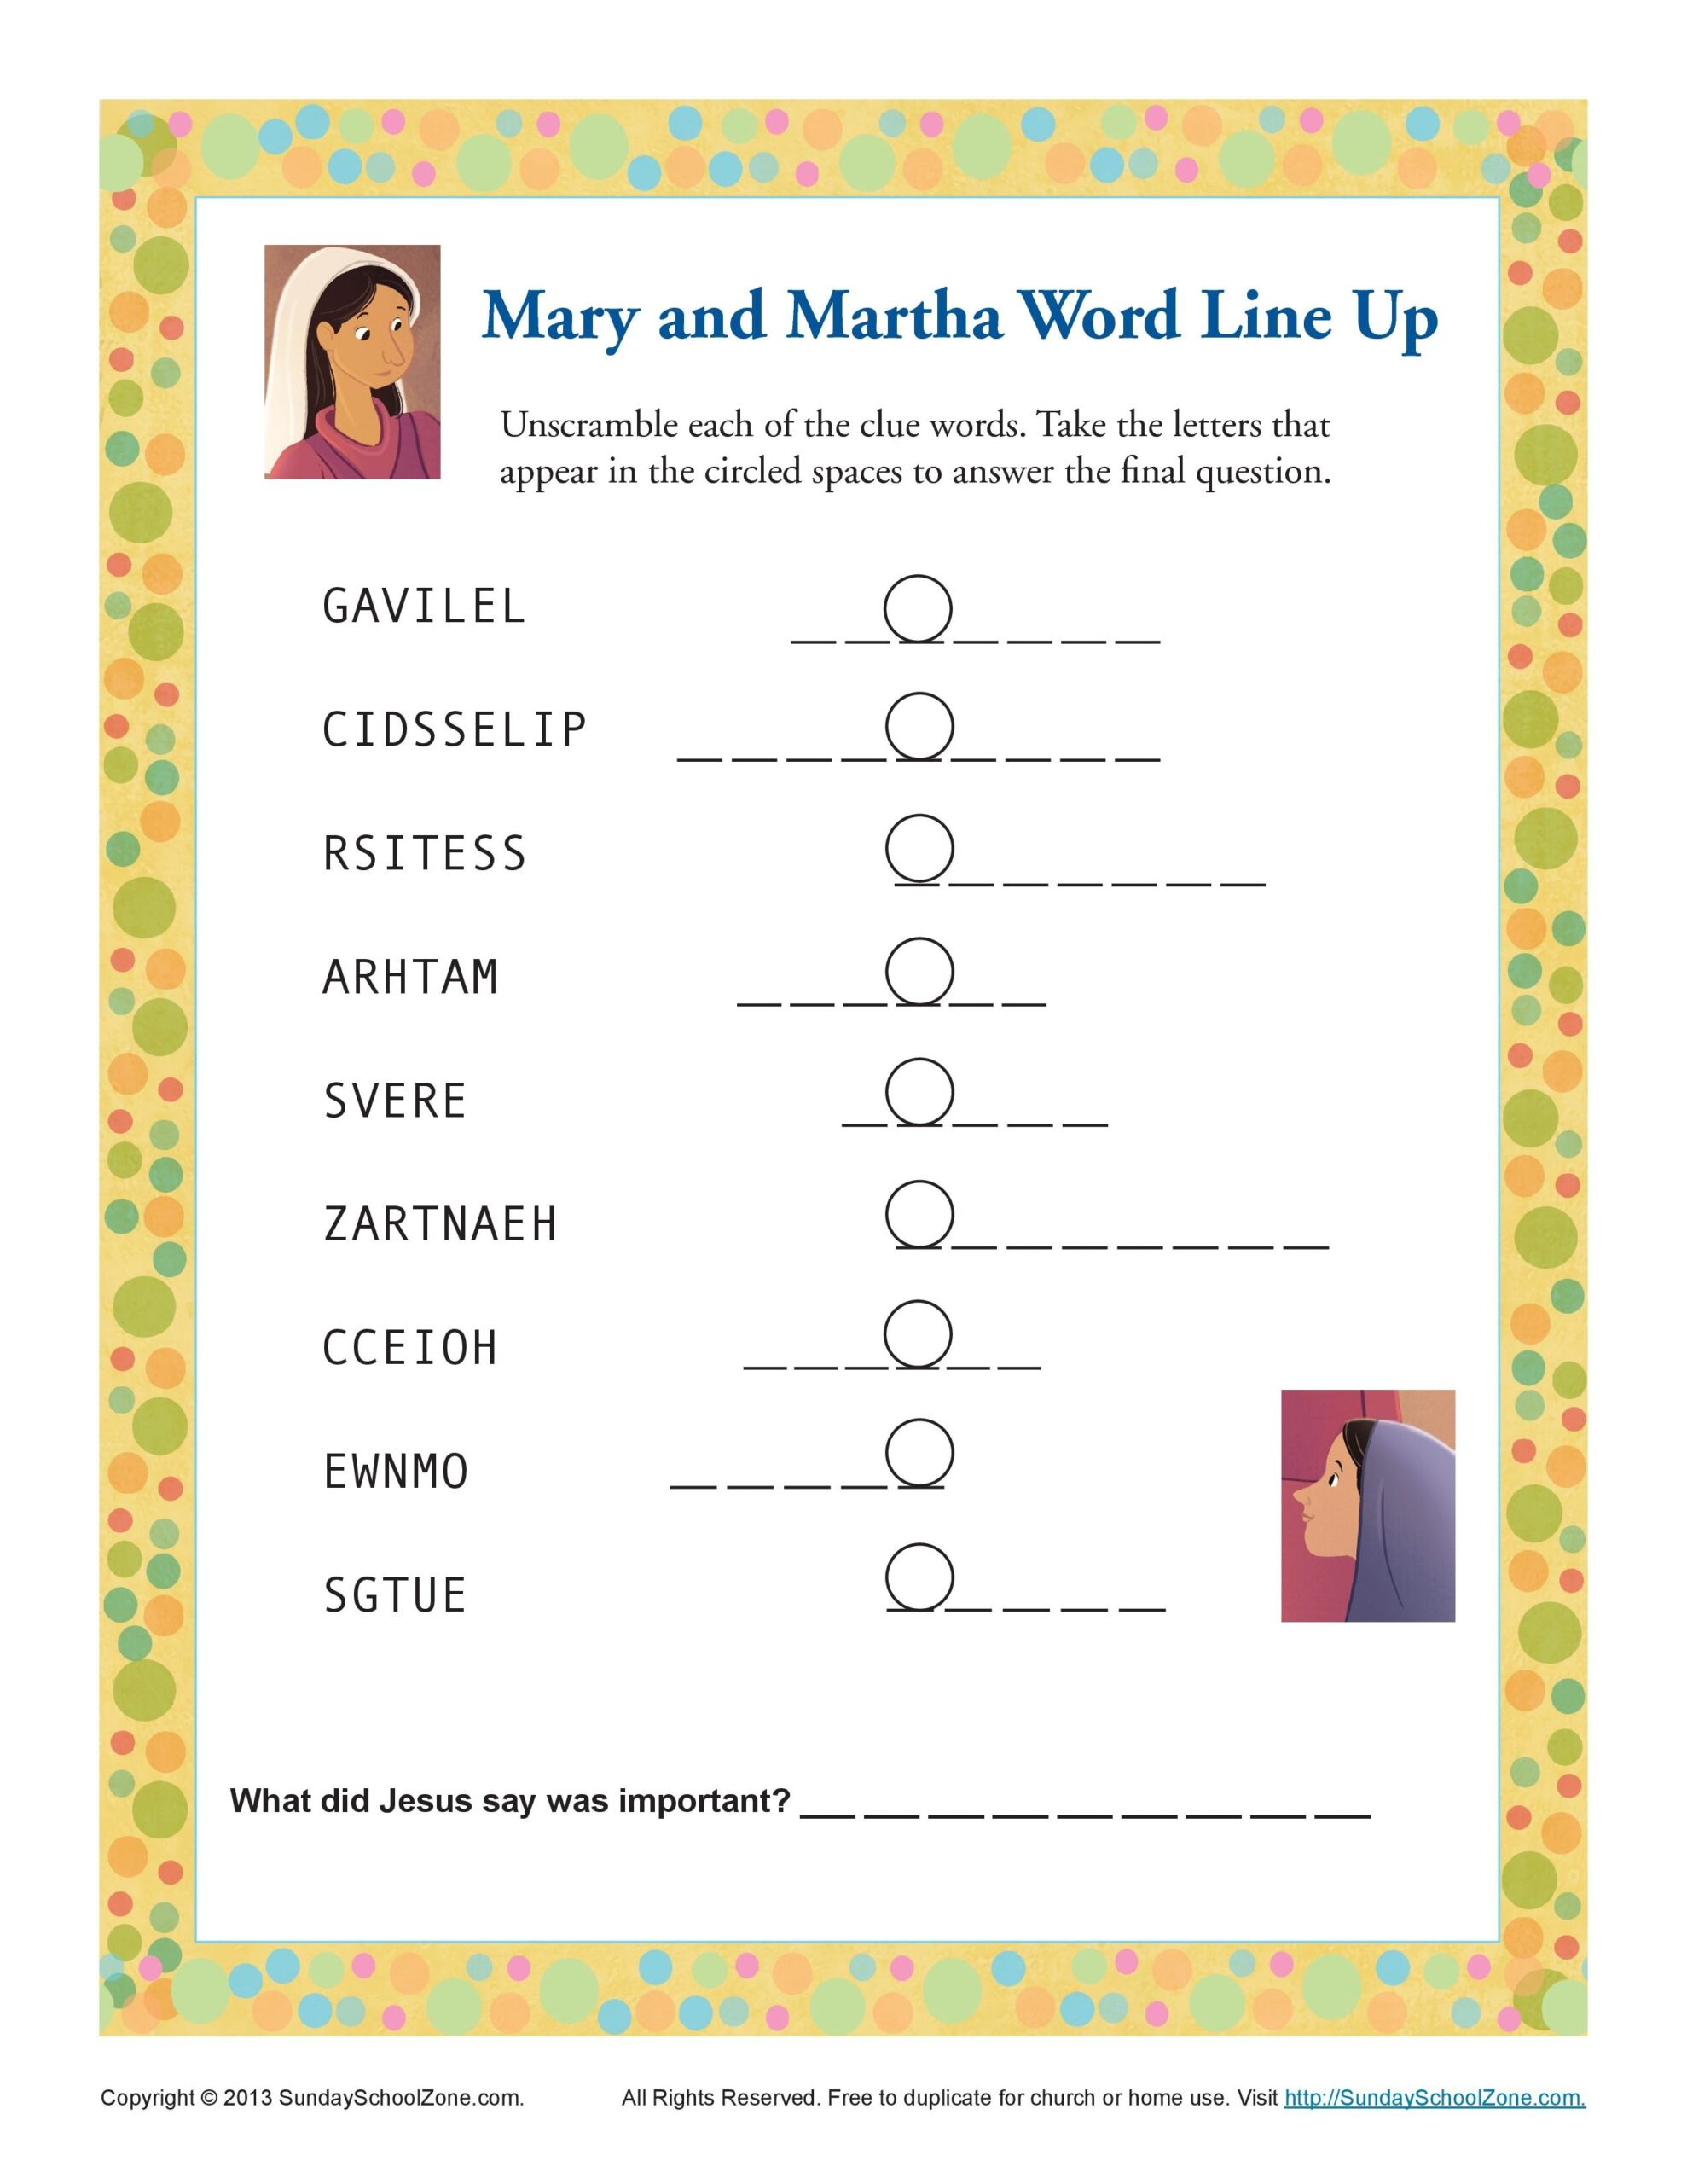 Mary And Martha Word Line Up Mary And Martha Mary And Martha Bible Word Line